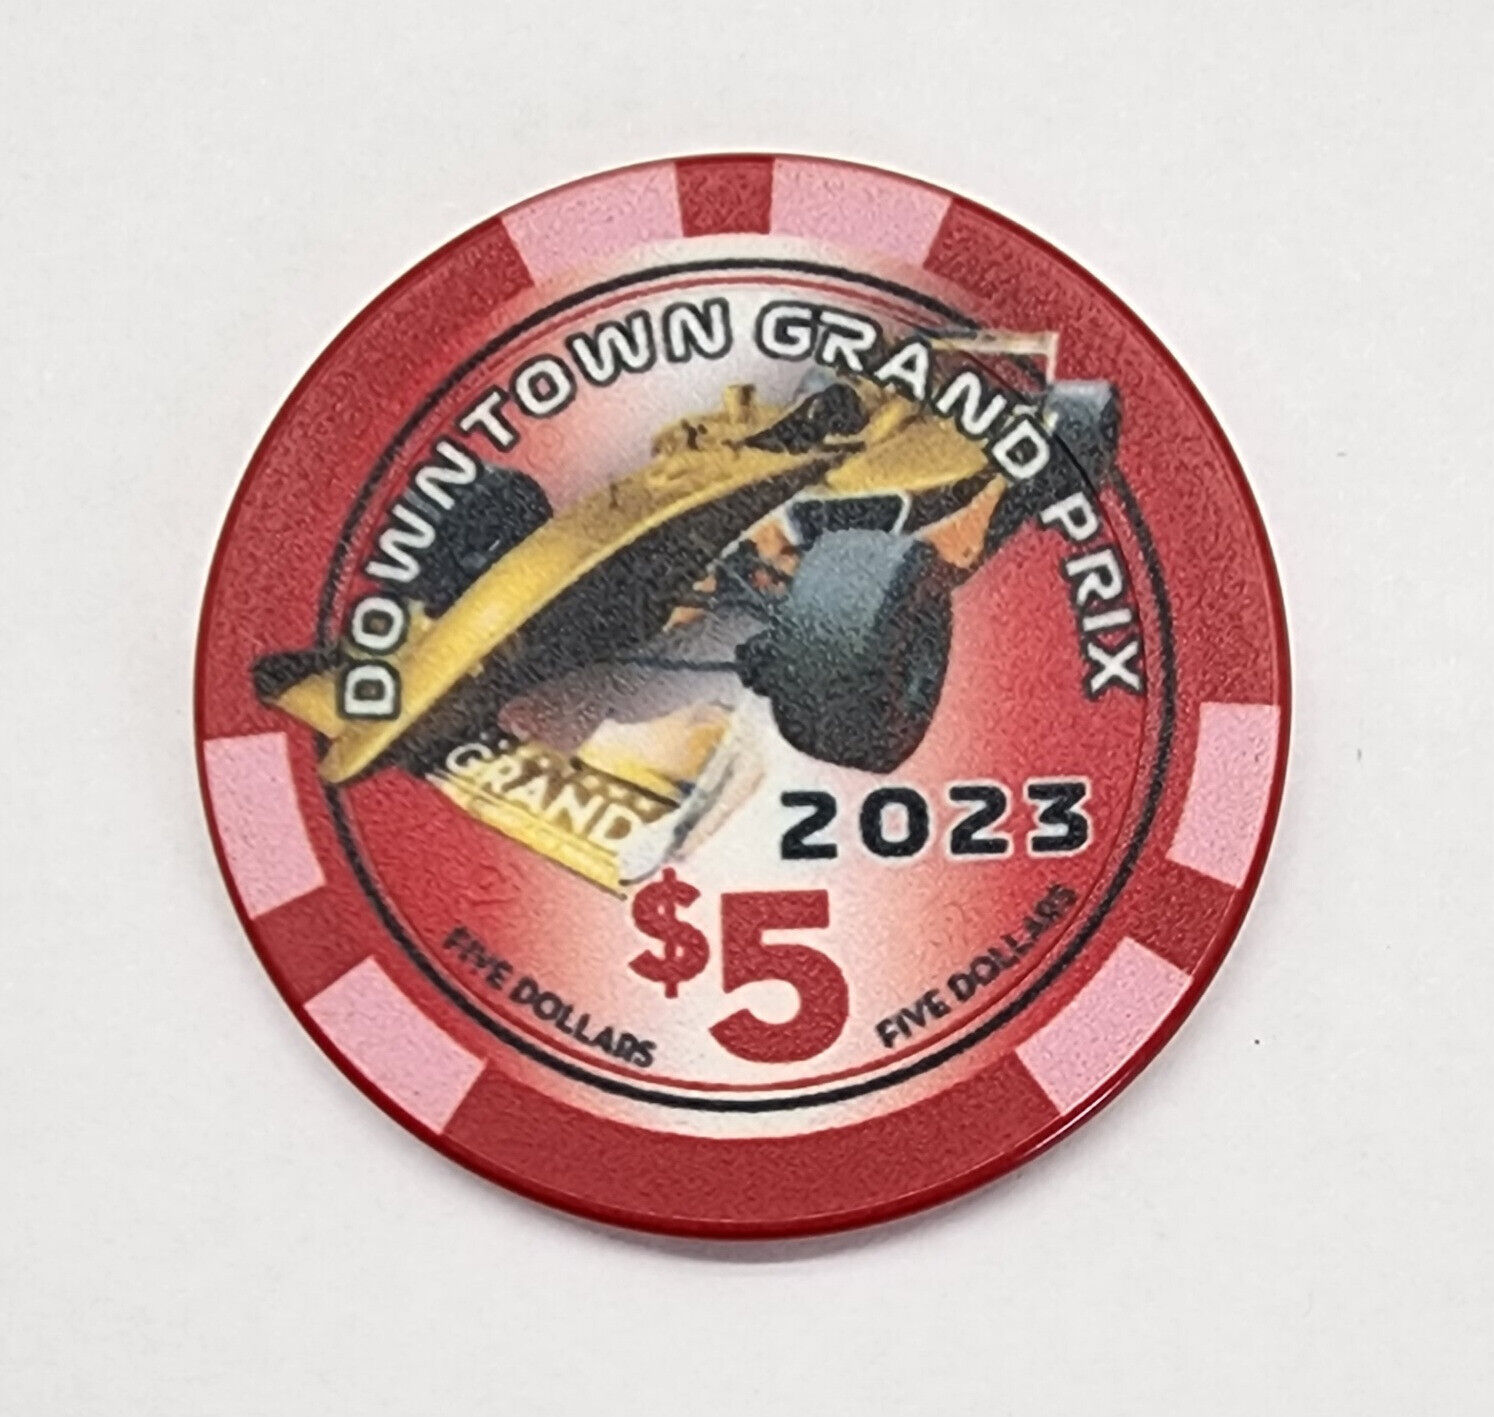 Grand Prix 2023 Downtown Grand Casino $5 Chip, Las Vegas, NV - Commemorative